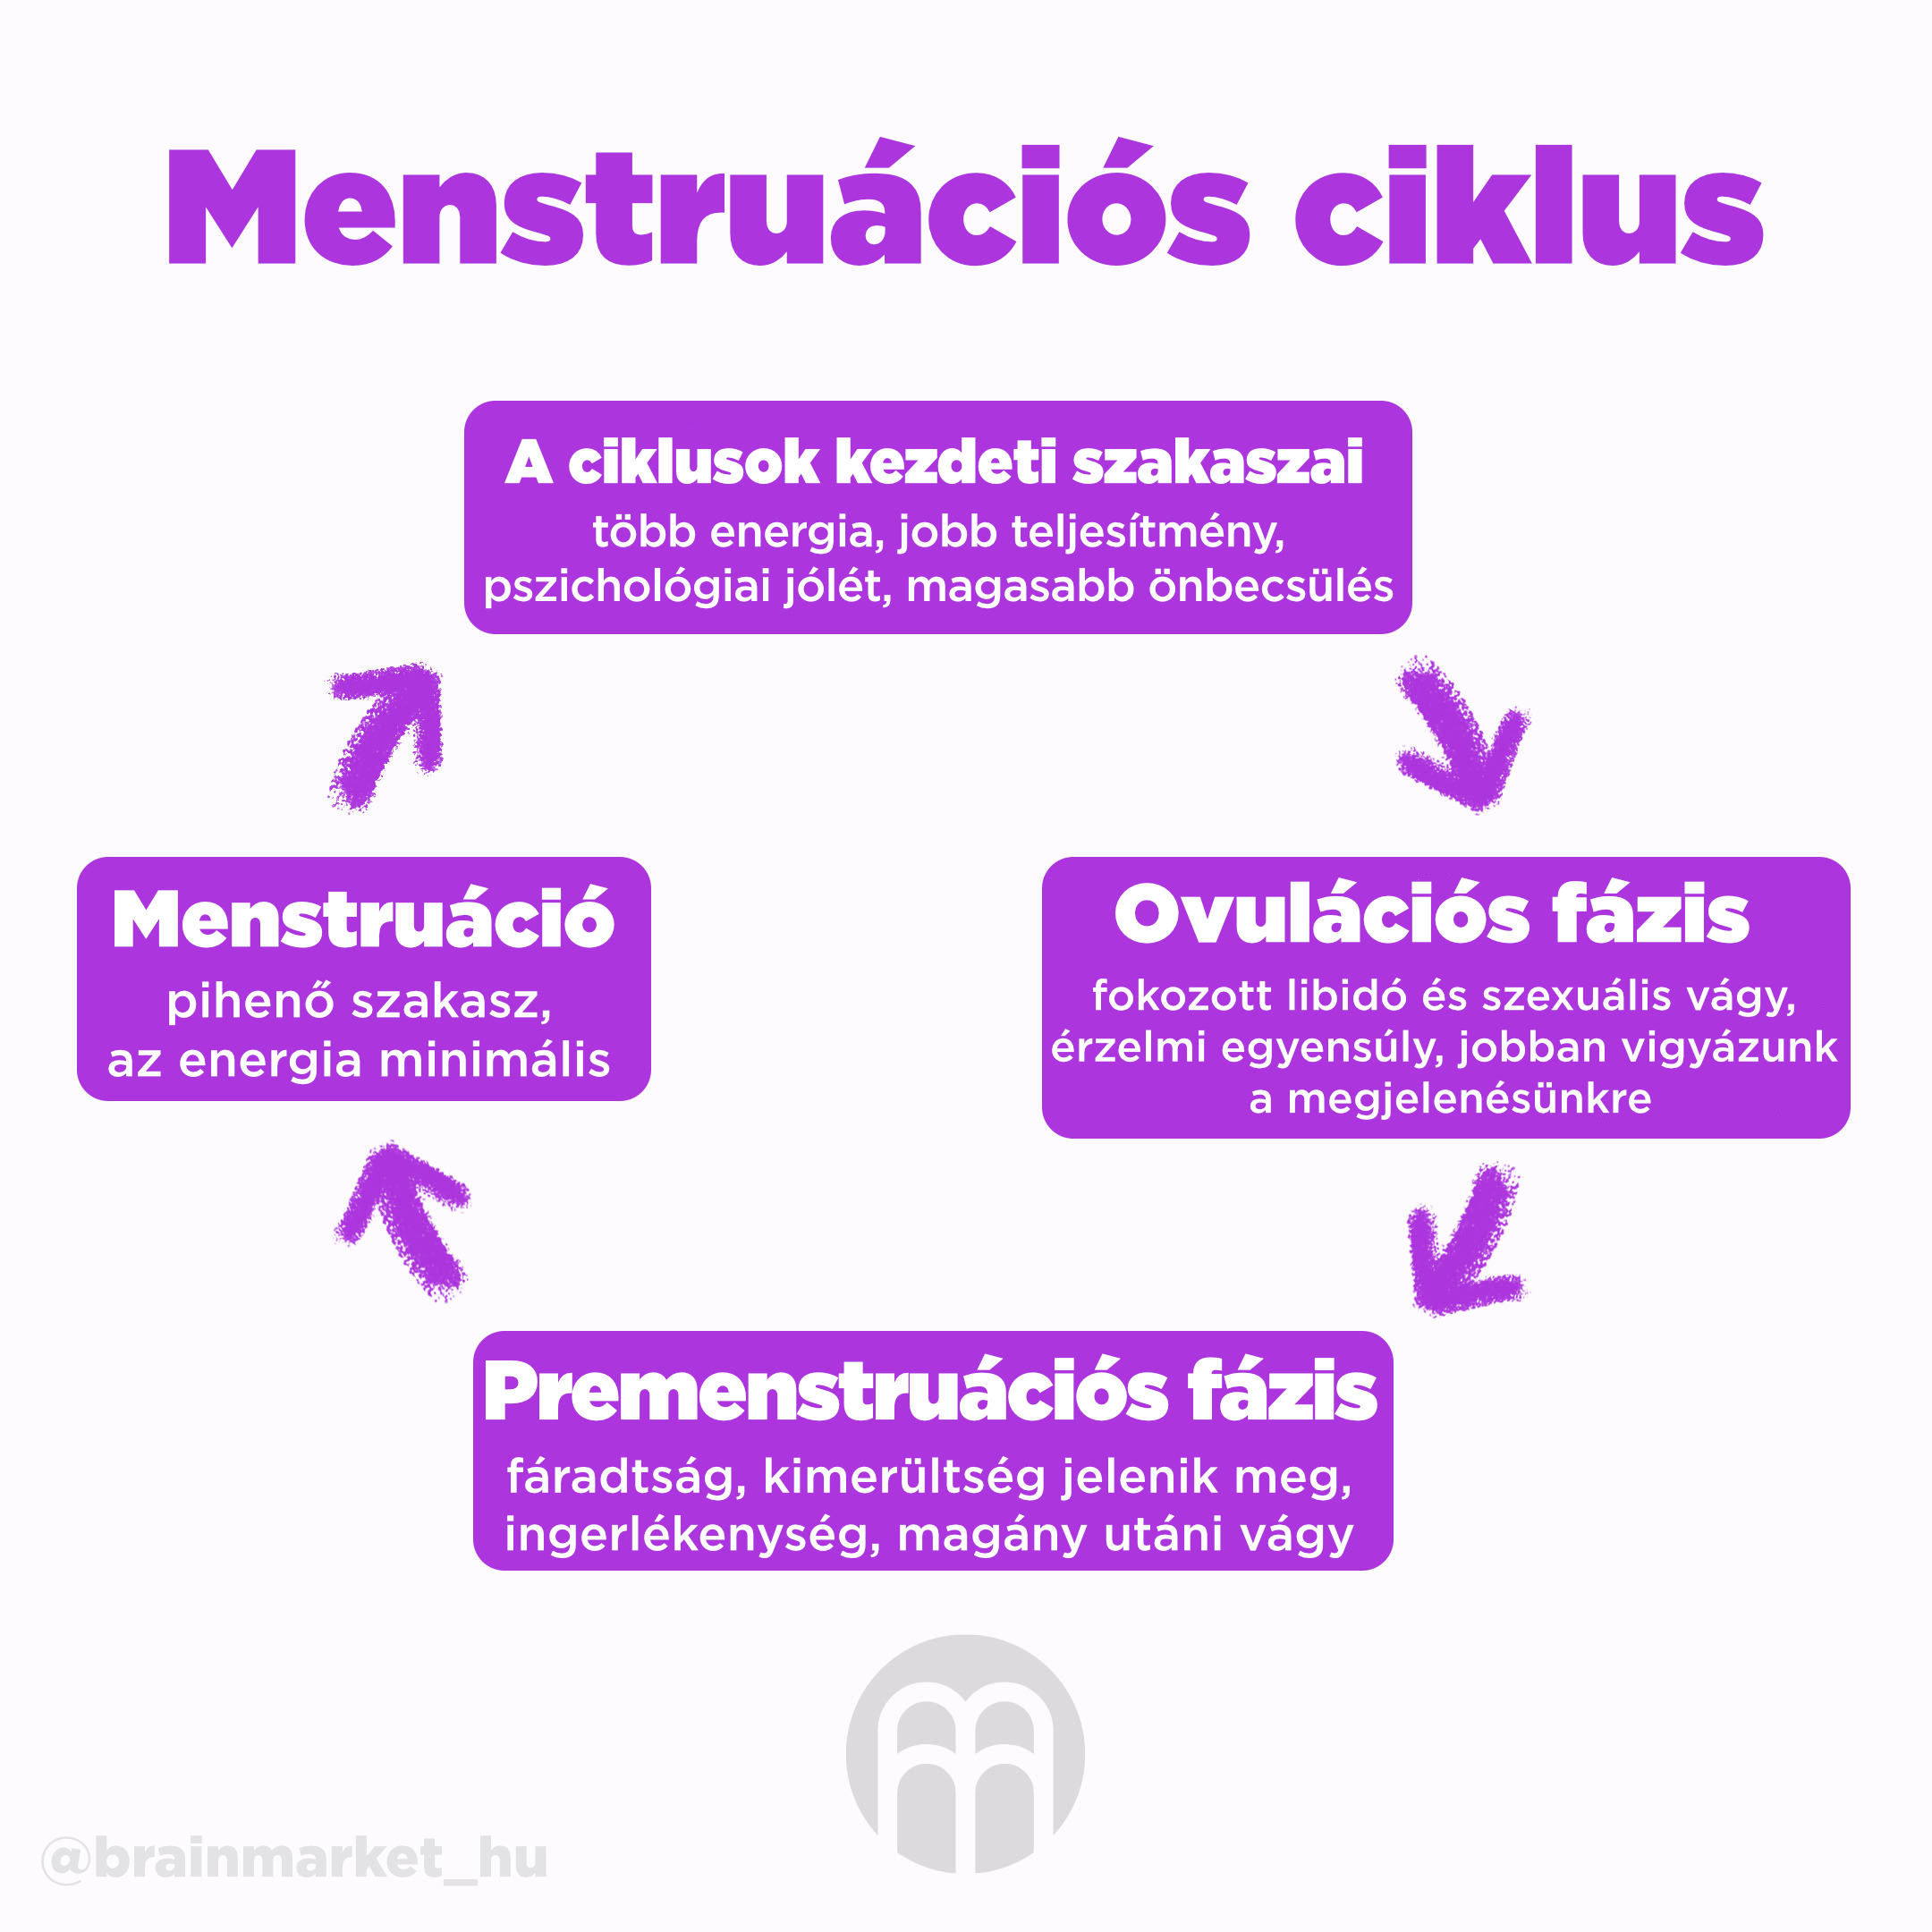 menstruacni_cyklus_infografika_brainmarket_hu